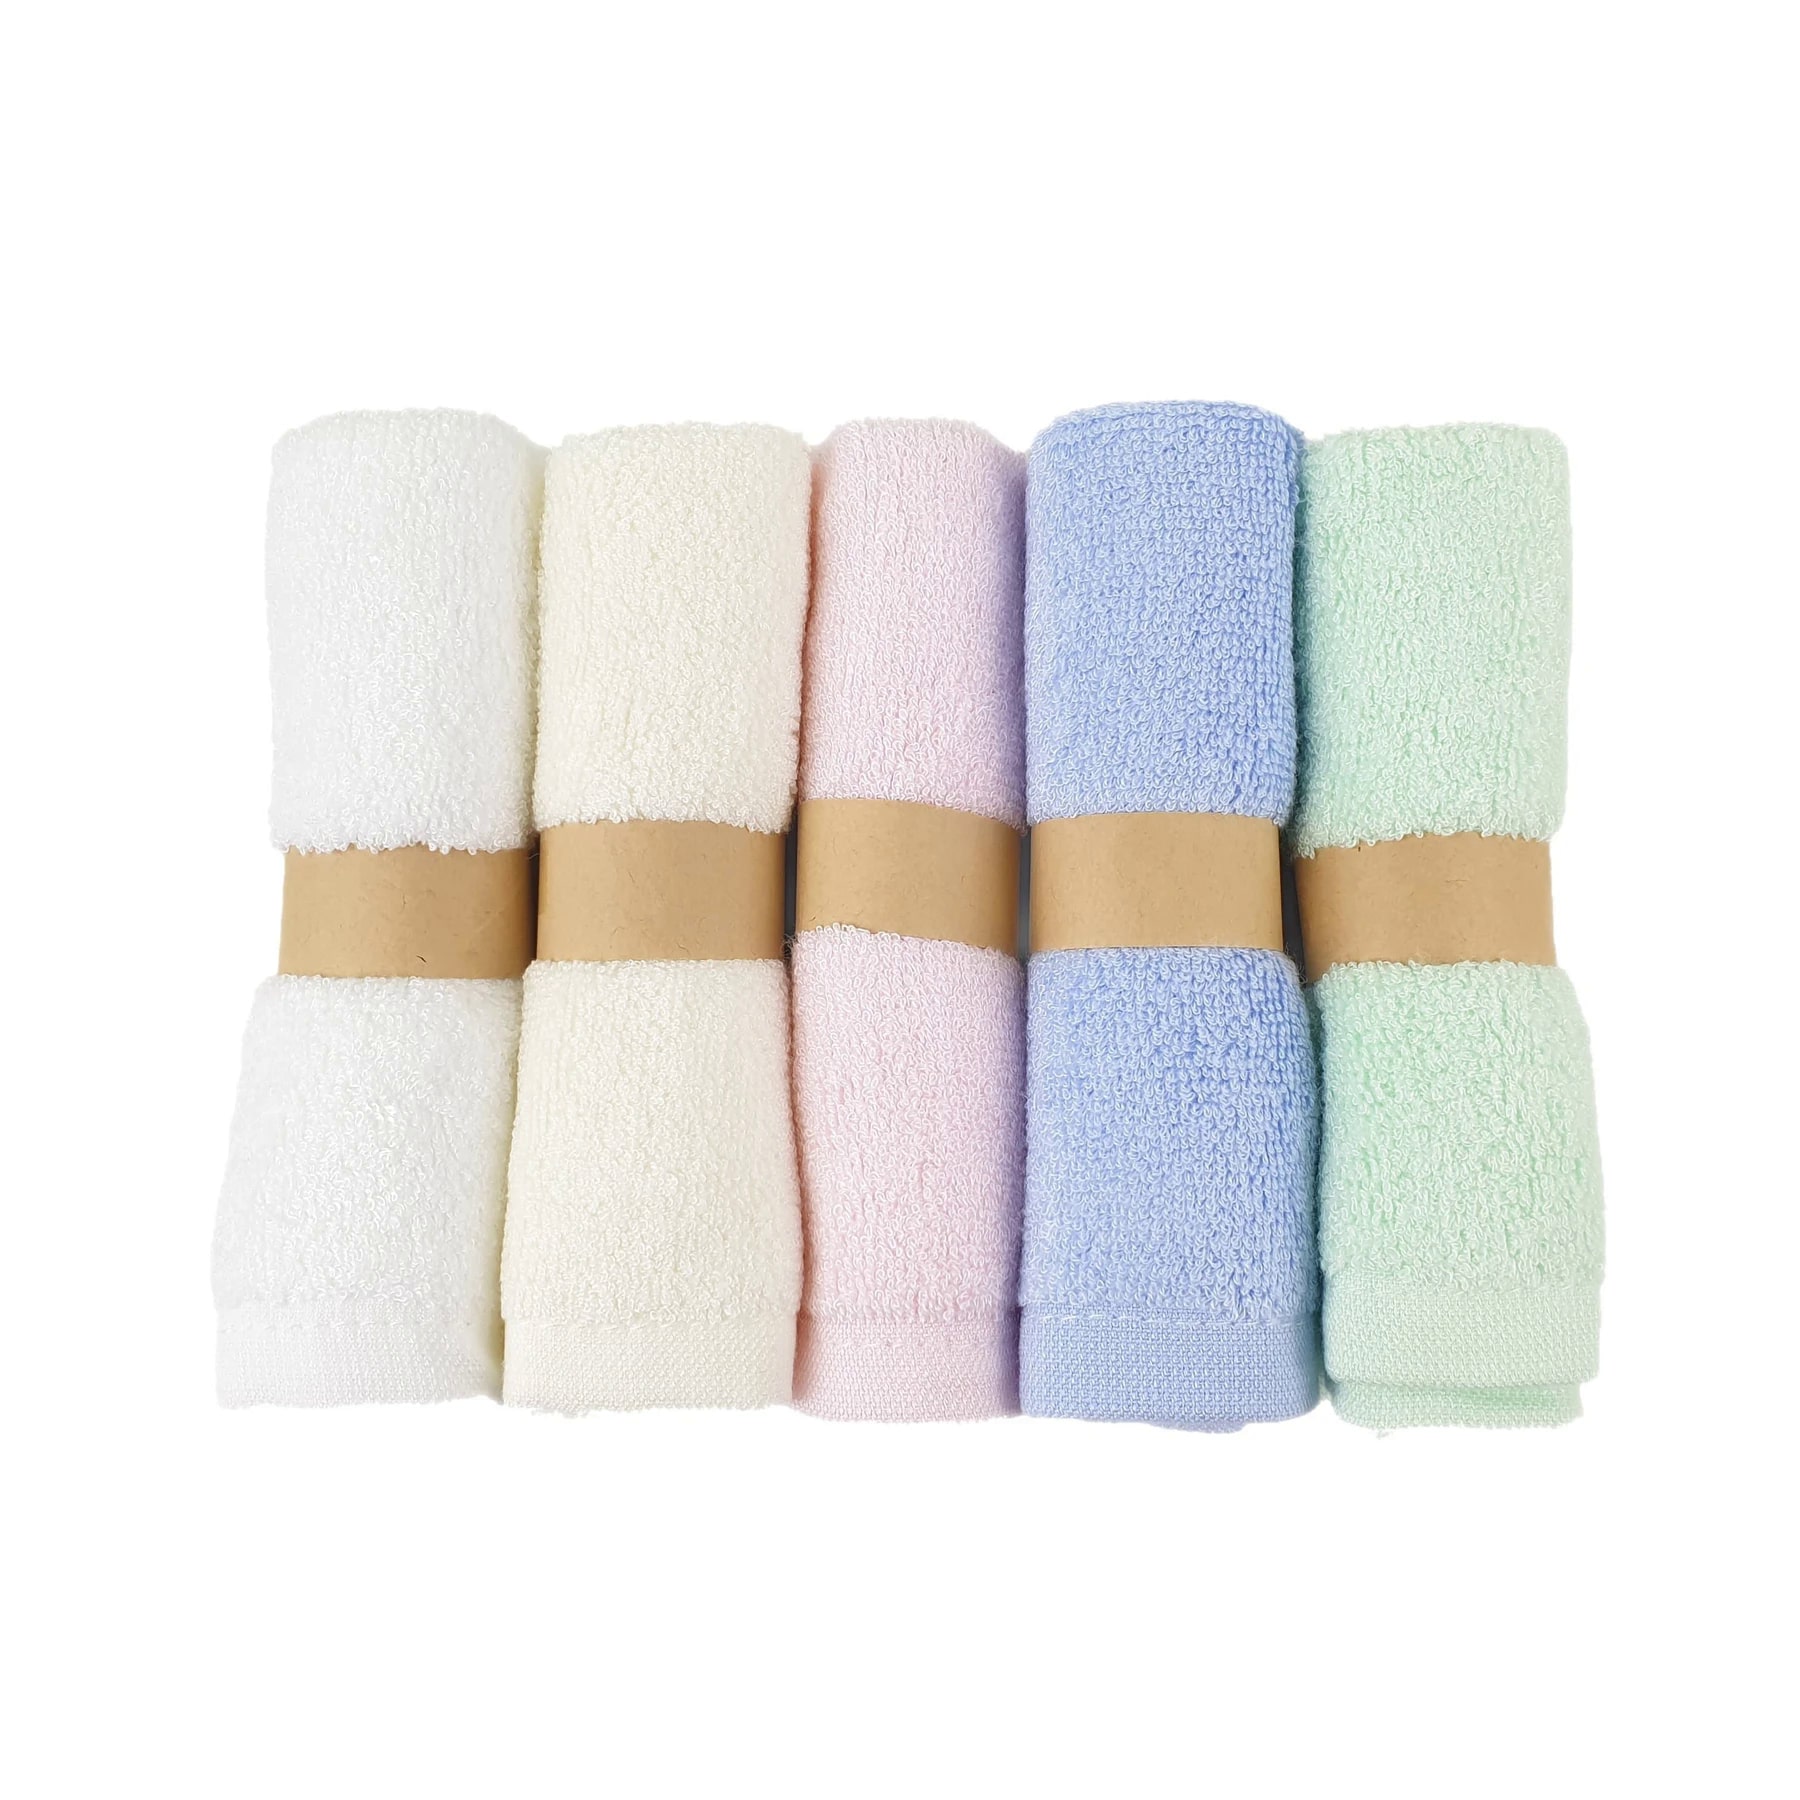 Simply Life Premium Bamboo Wash Face Cloth (5pcs/Set) Bundles of 2 pack